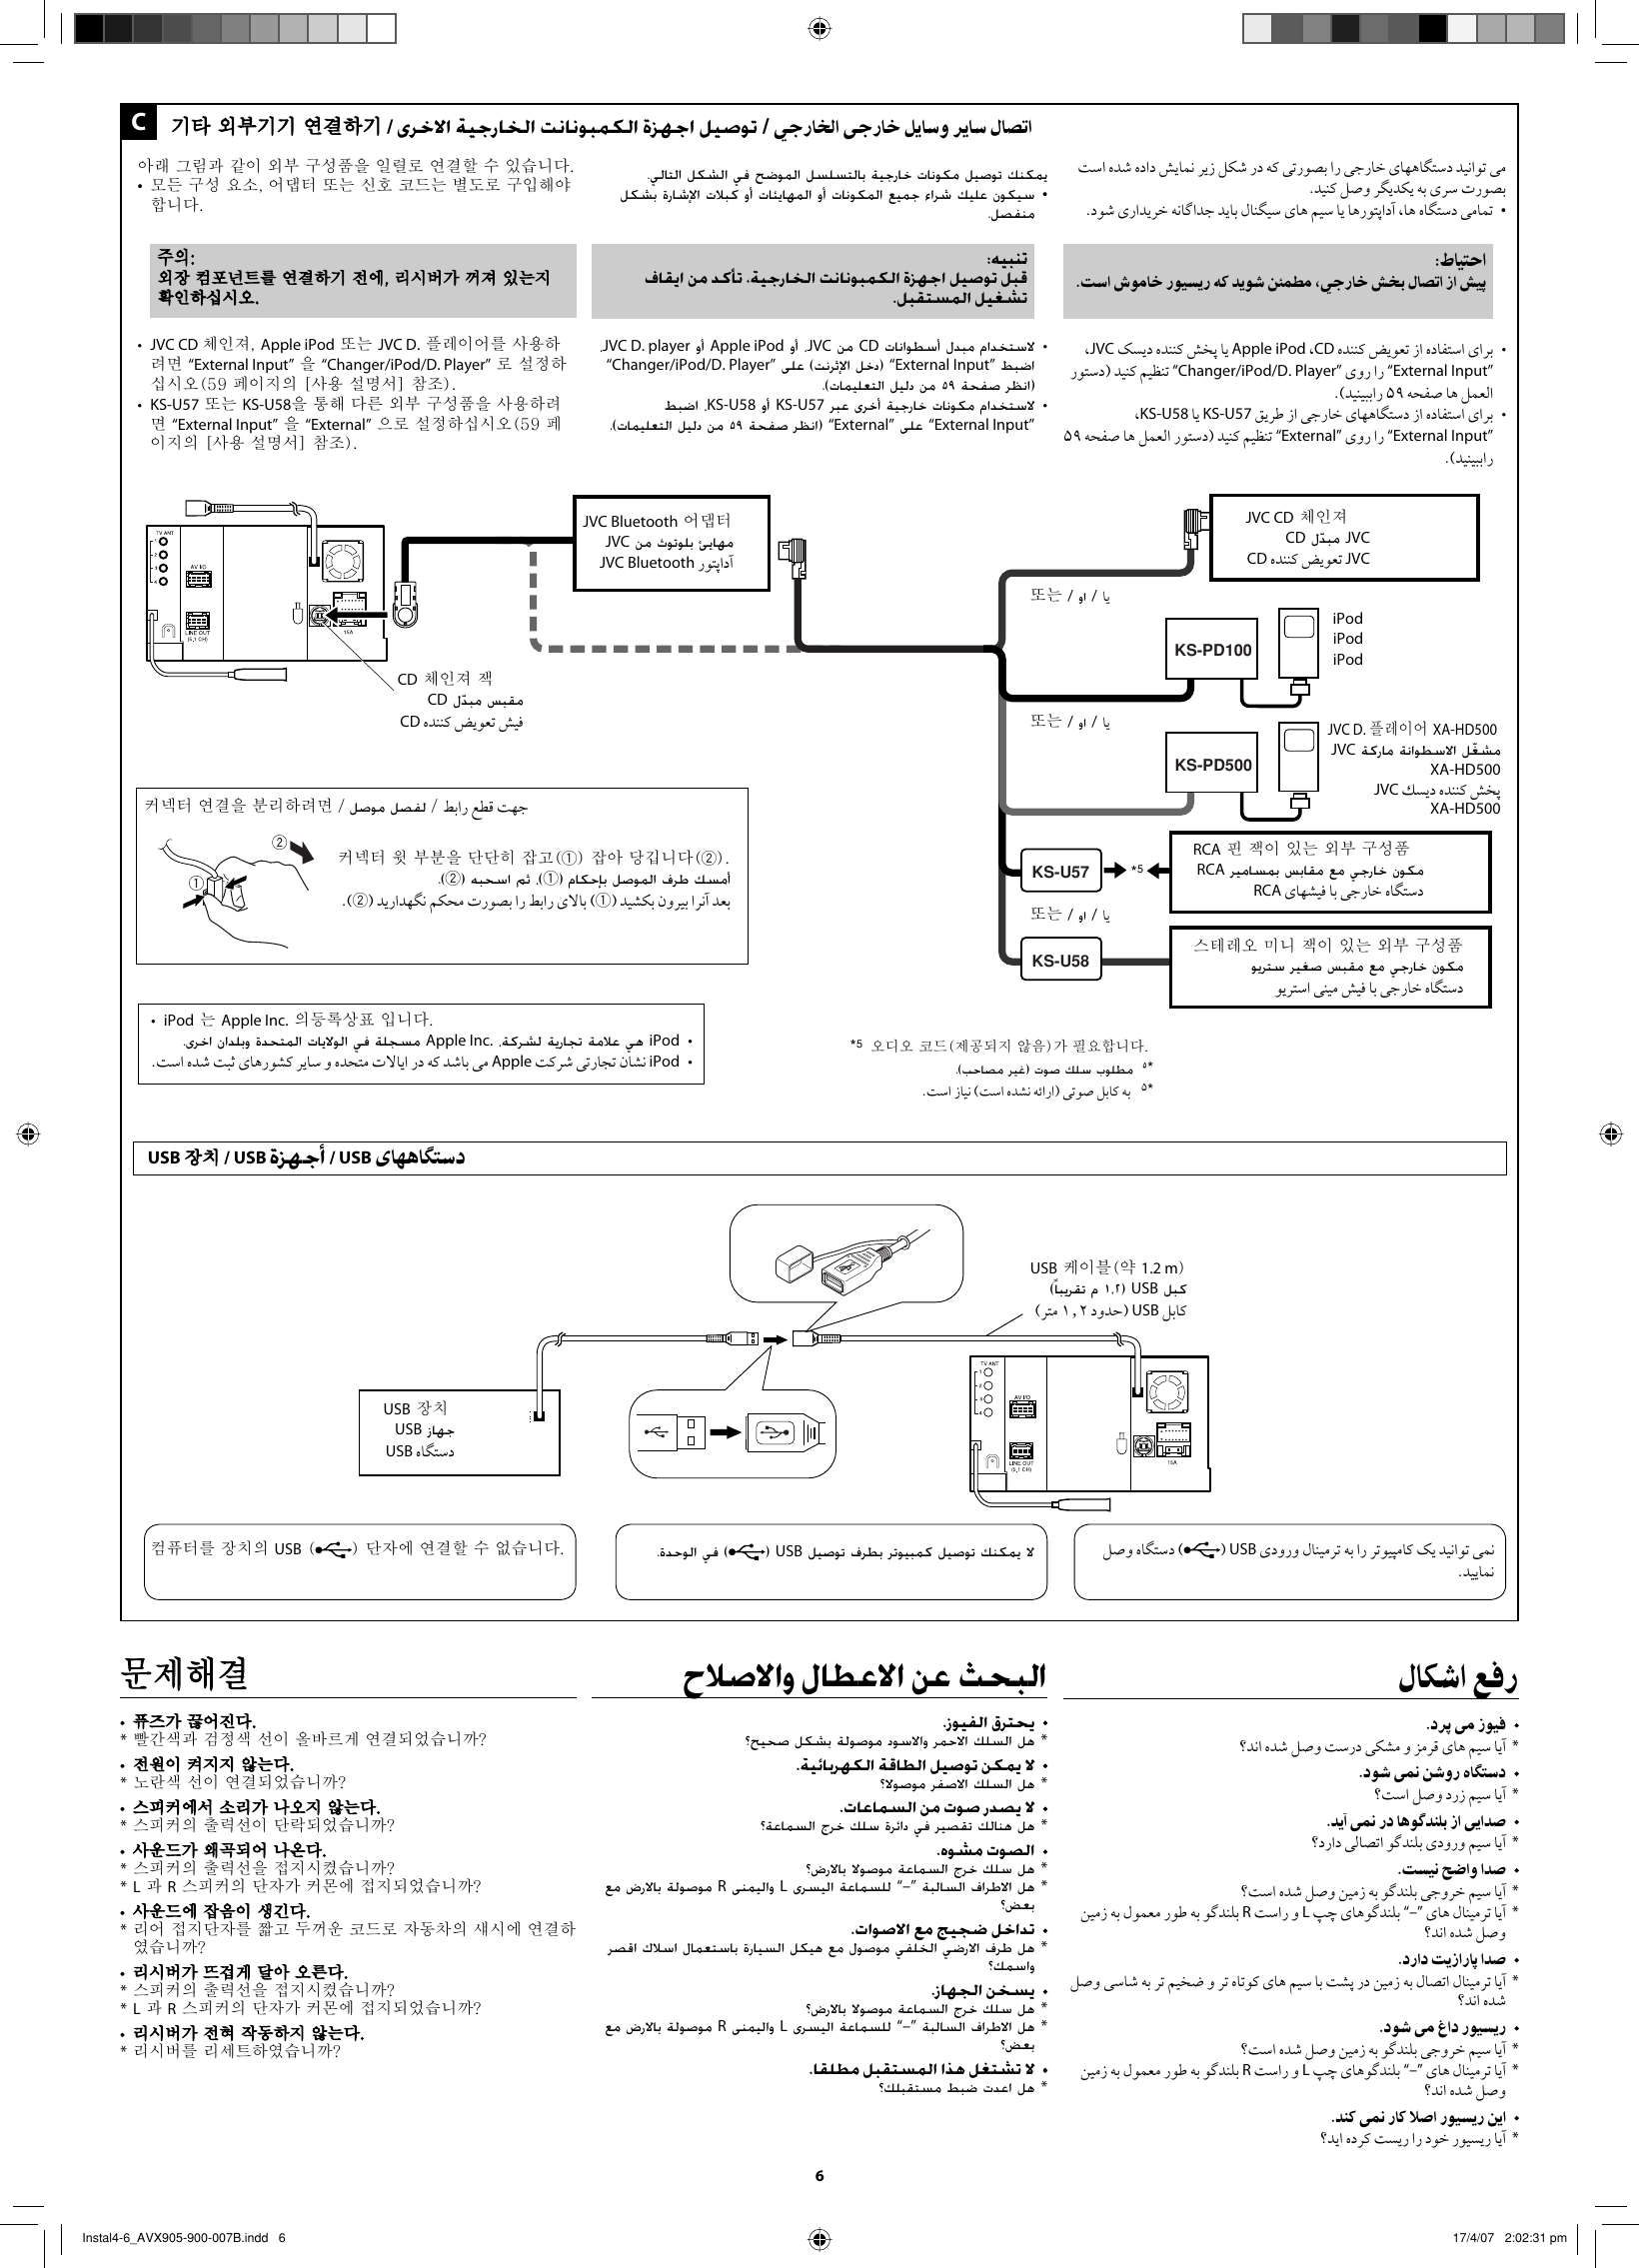 Page 6 of 6 - JVC KW-AVX900U KW-AVX905/KW-AVX900[U] User Manual INSTALLATION (Asia) LVT1670-007B